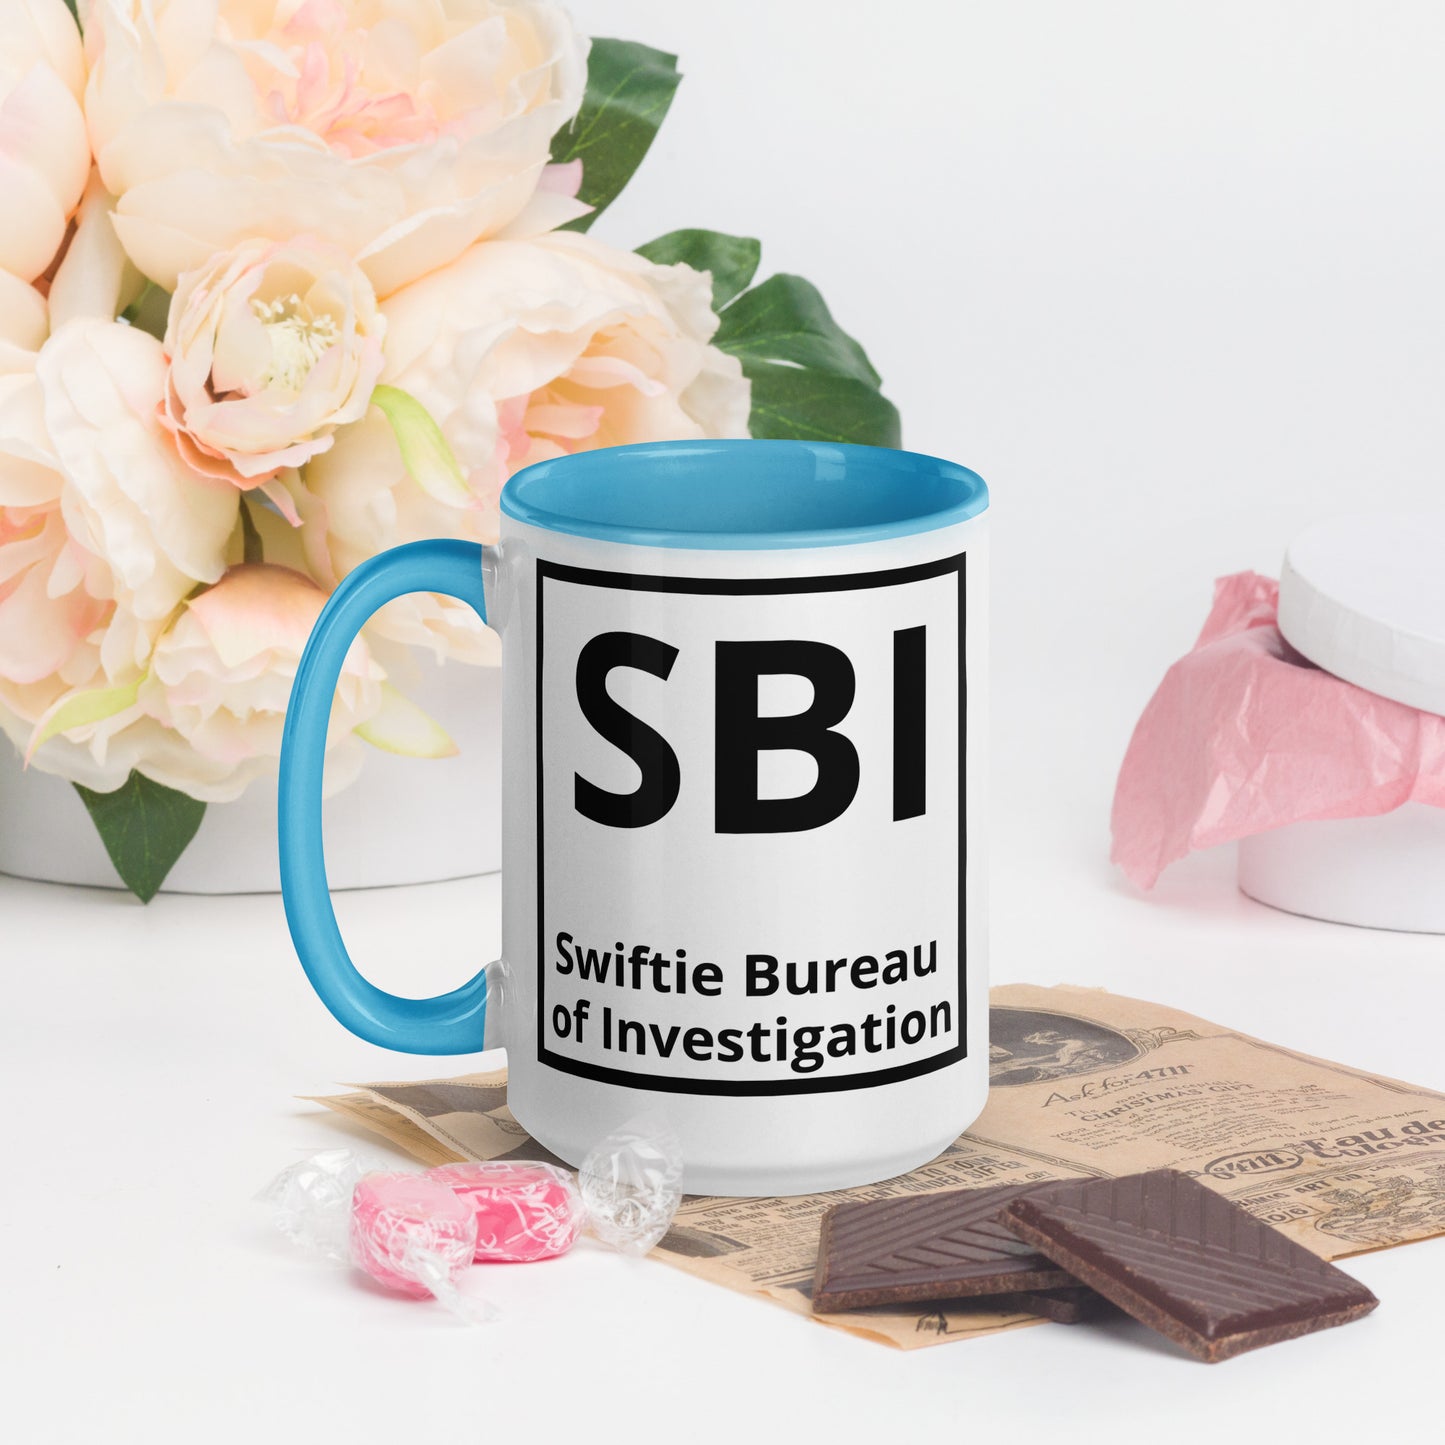 SBI Swiftie Bureau of Investigation Mug with Color Inside